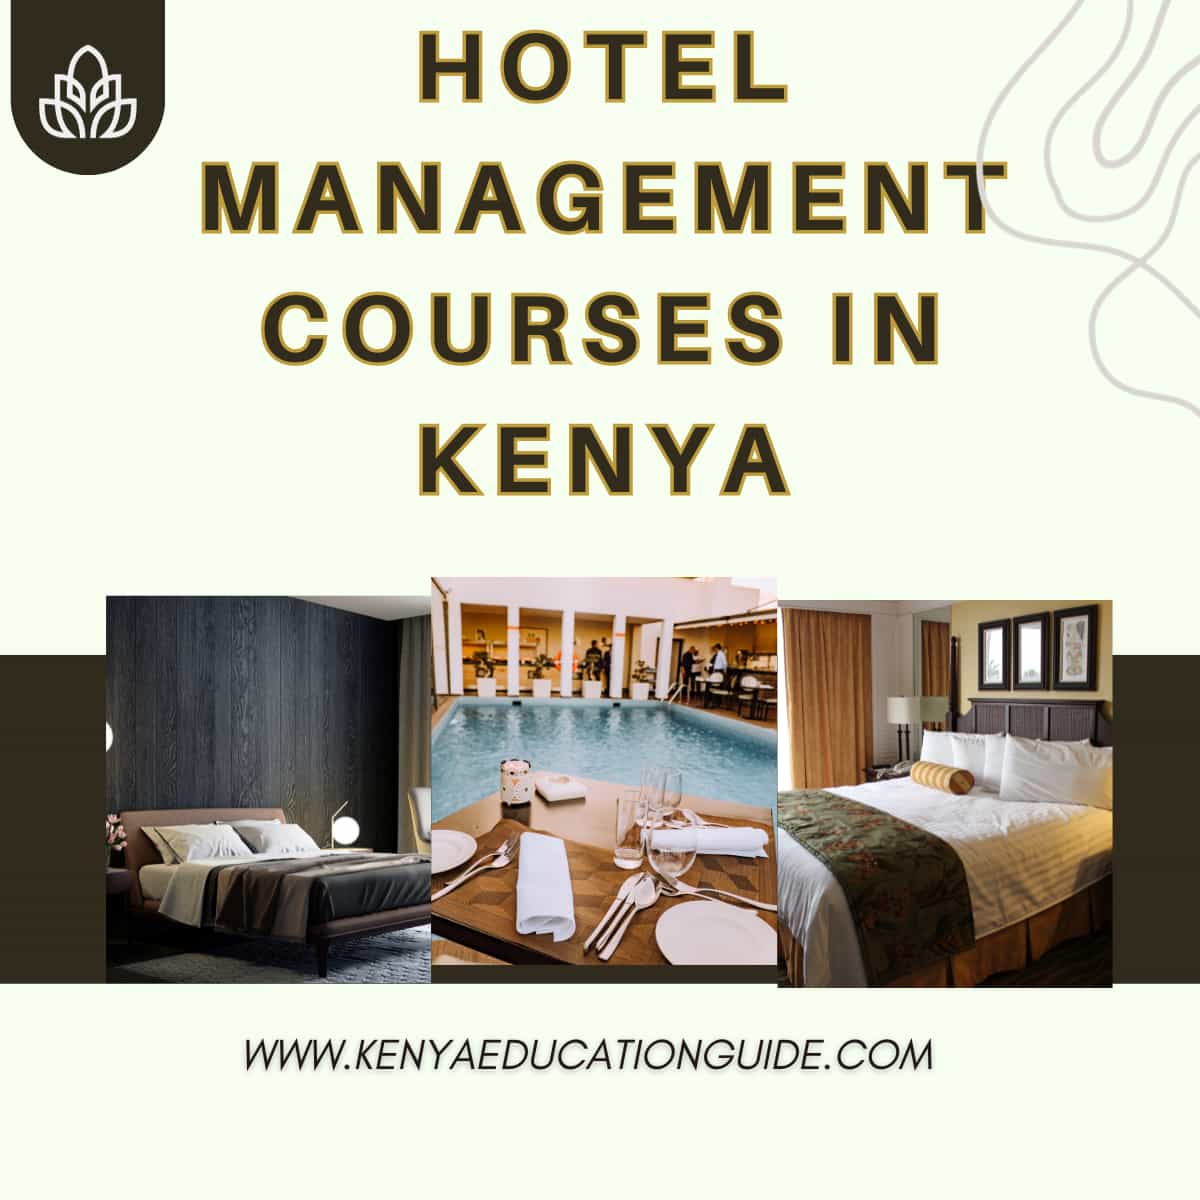 Hotel Management Courses in Kenya